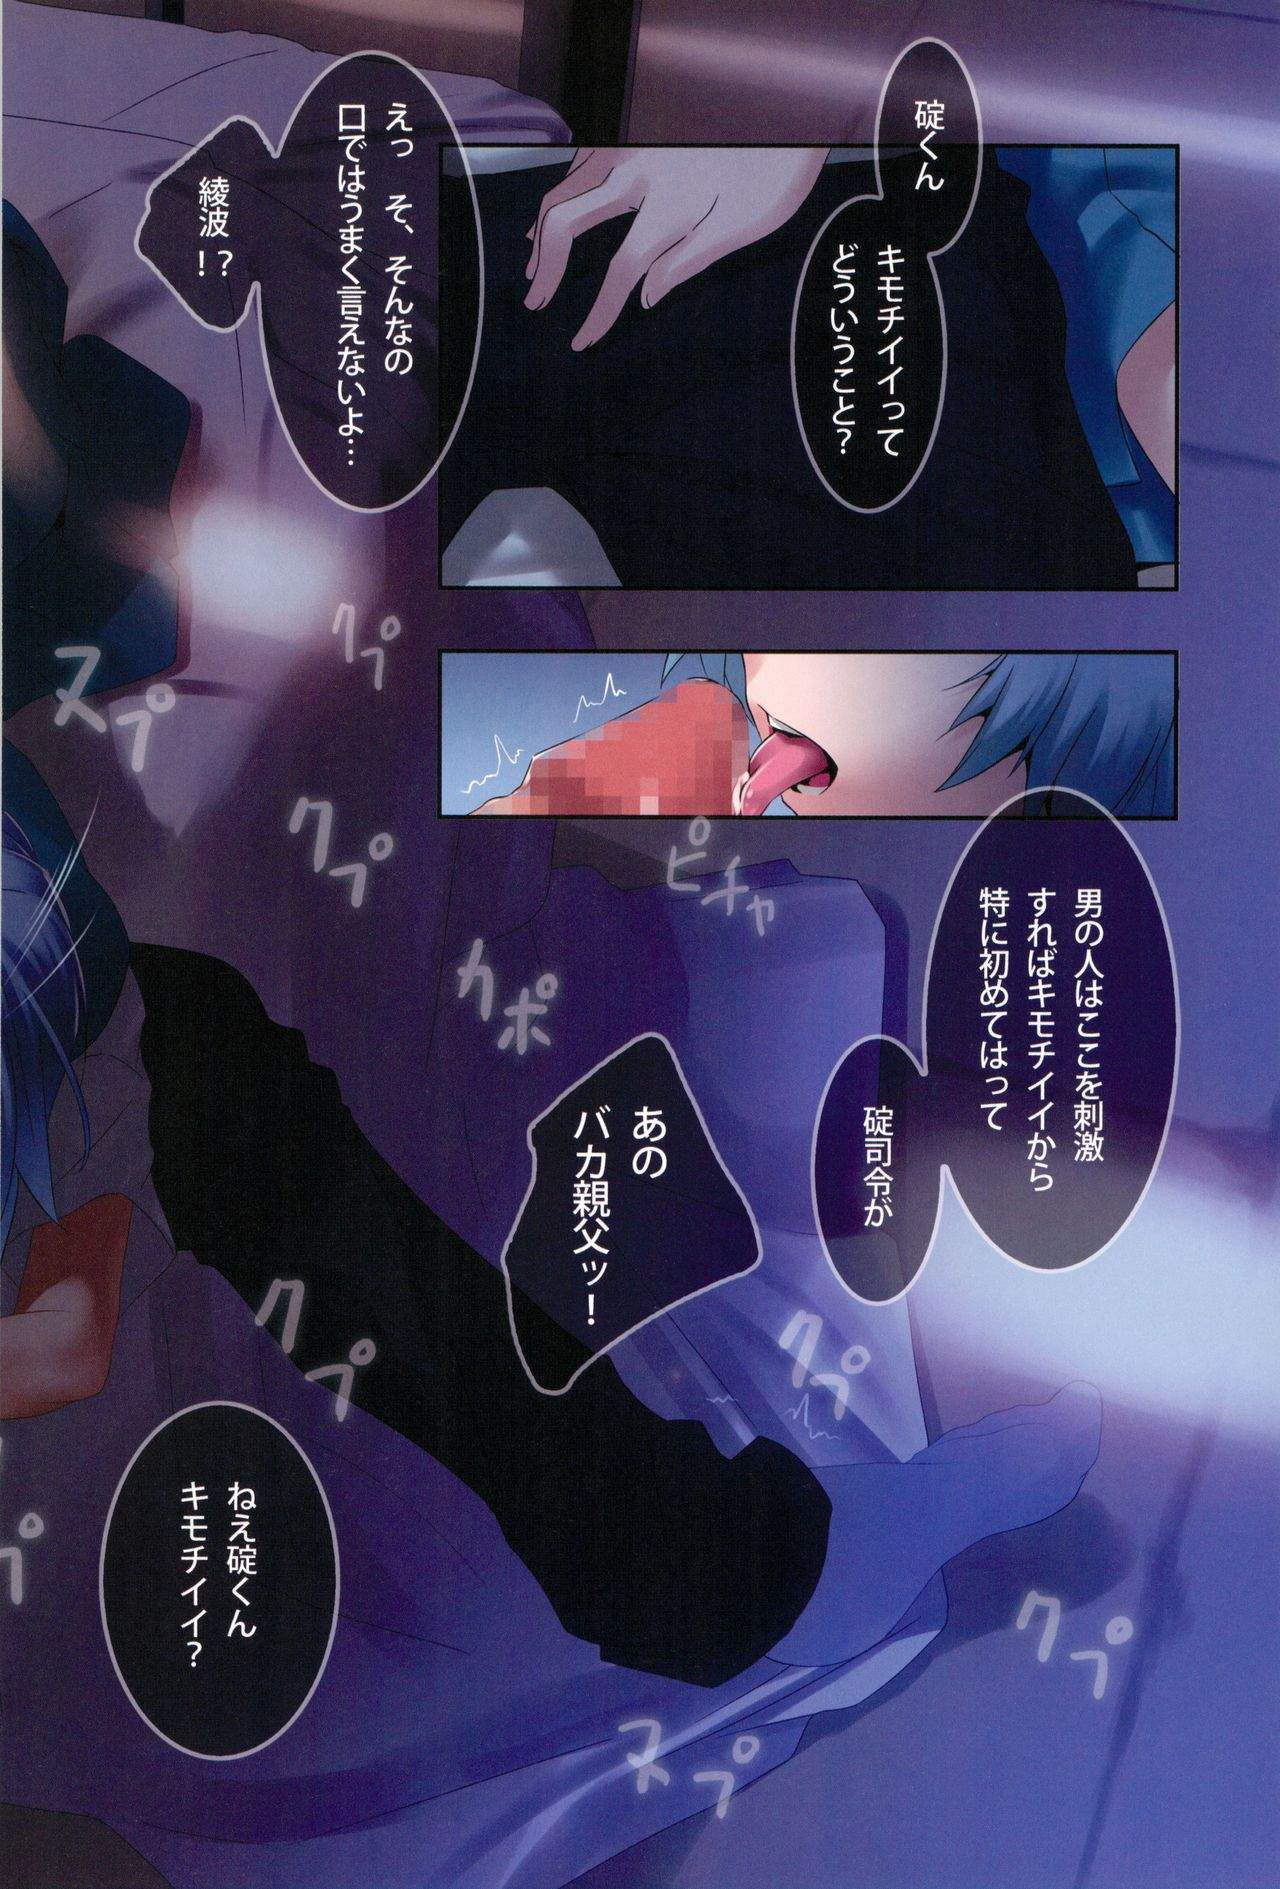 An eroticism image summary of Neon Genesis Evangelion! 16